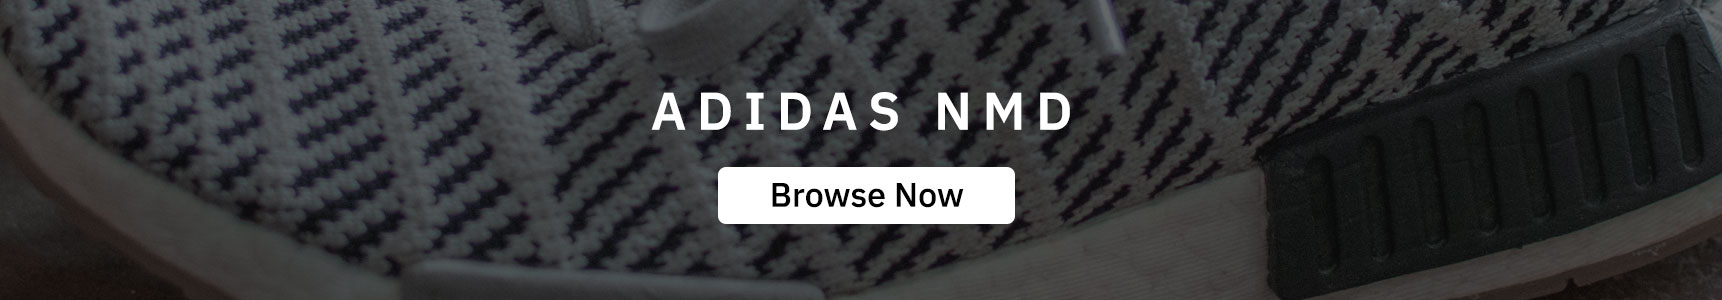 blog_inpost_adidas-nmd